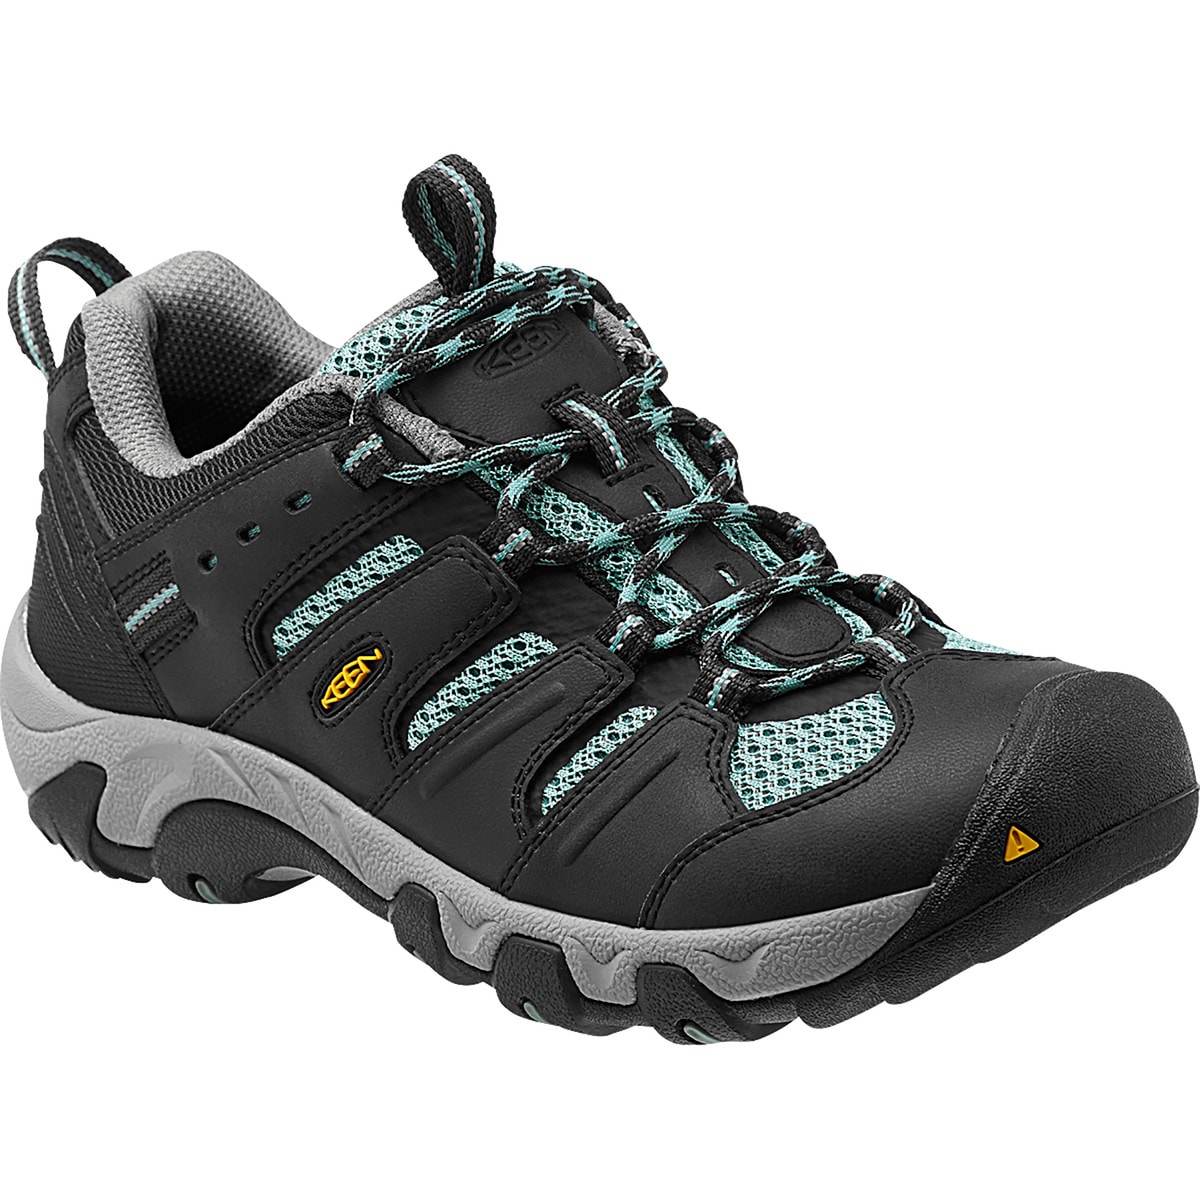 Original item: Womens Keen koven wp hiking shoes size 8.5